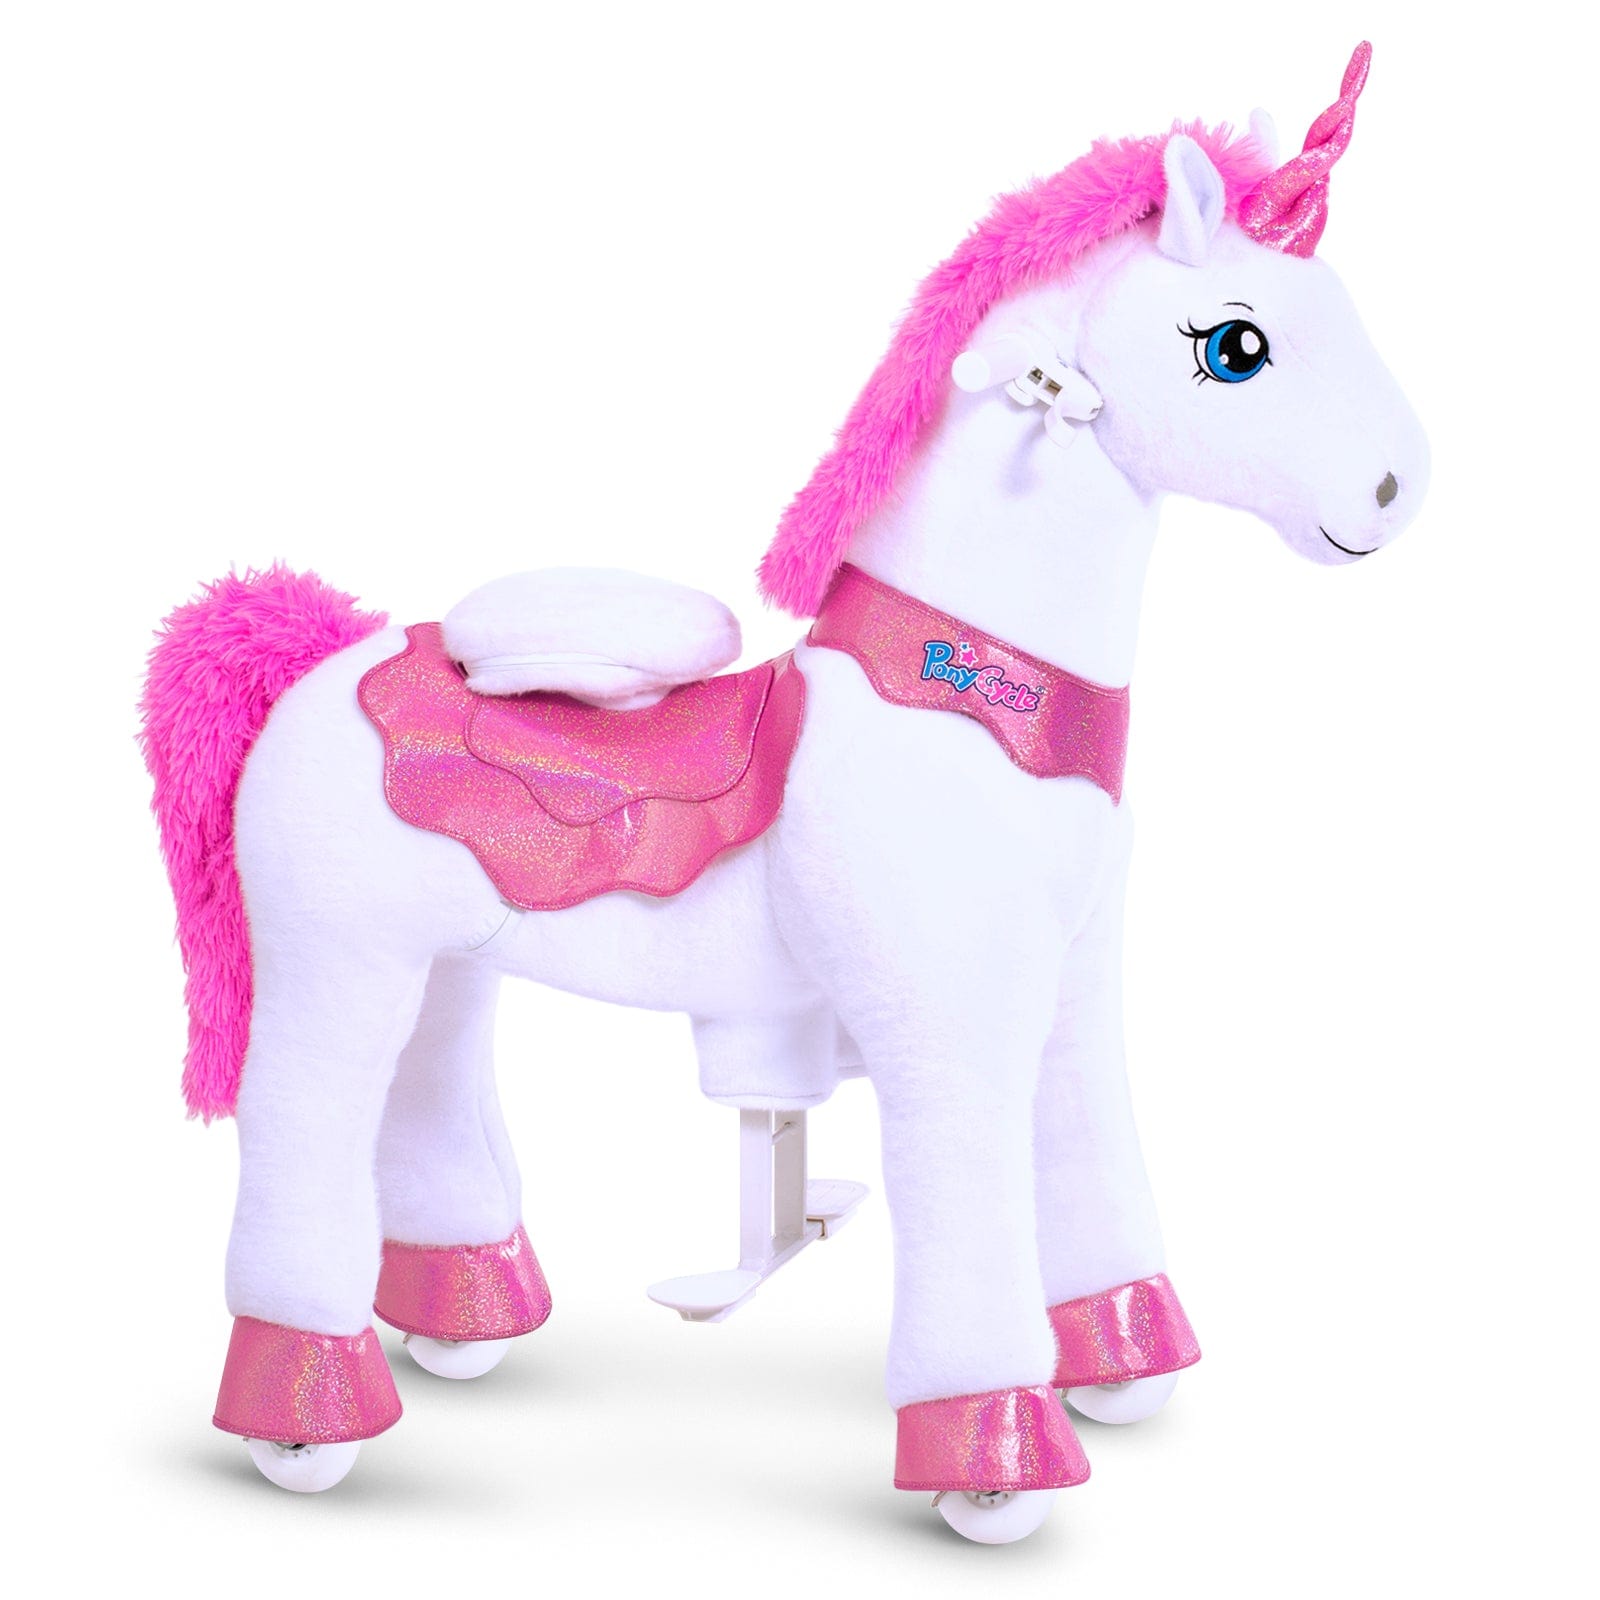 riding unicorn toy